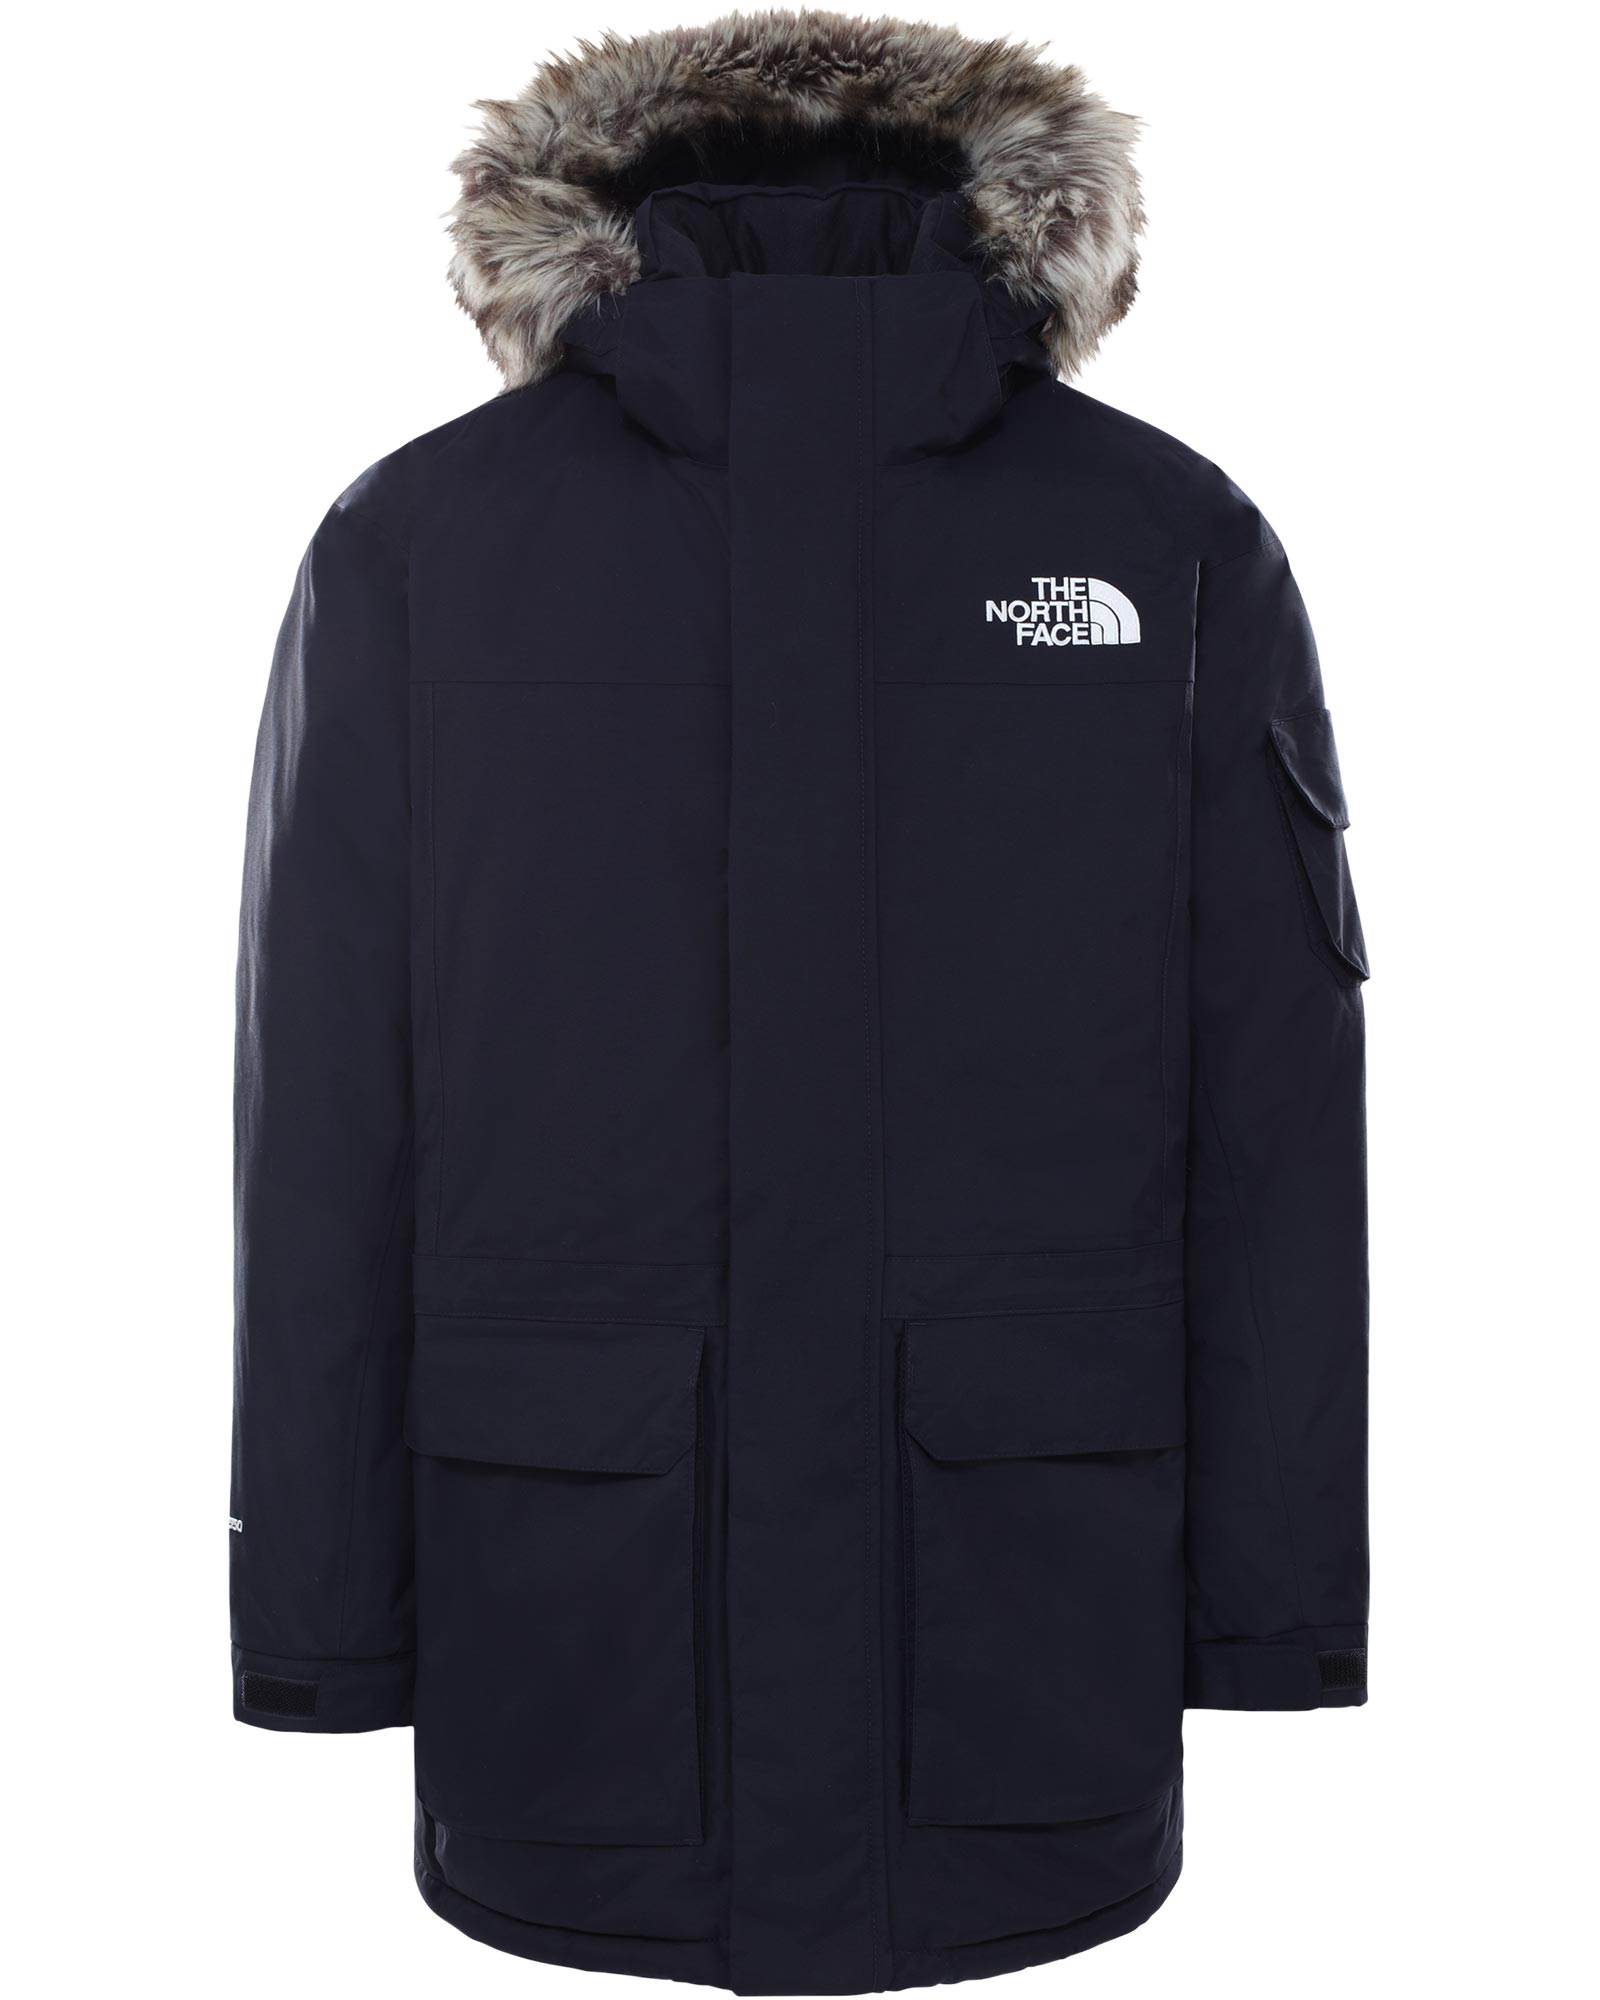 The North Face McMurdo Men's Jacket | Ellis Brigham